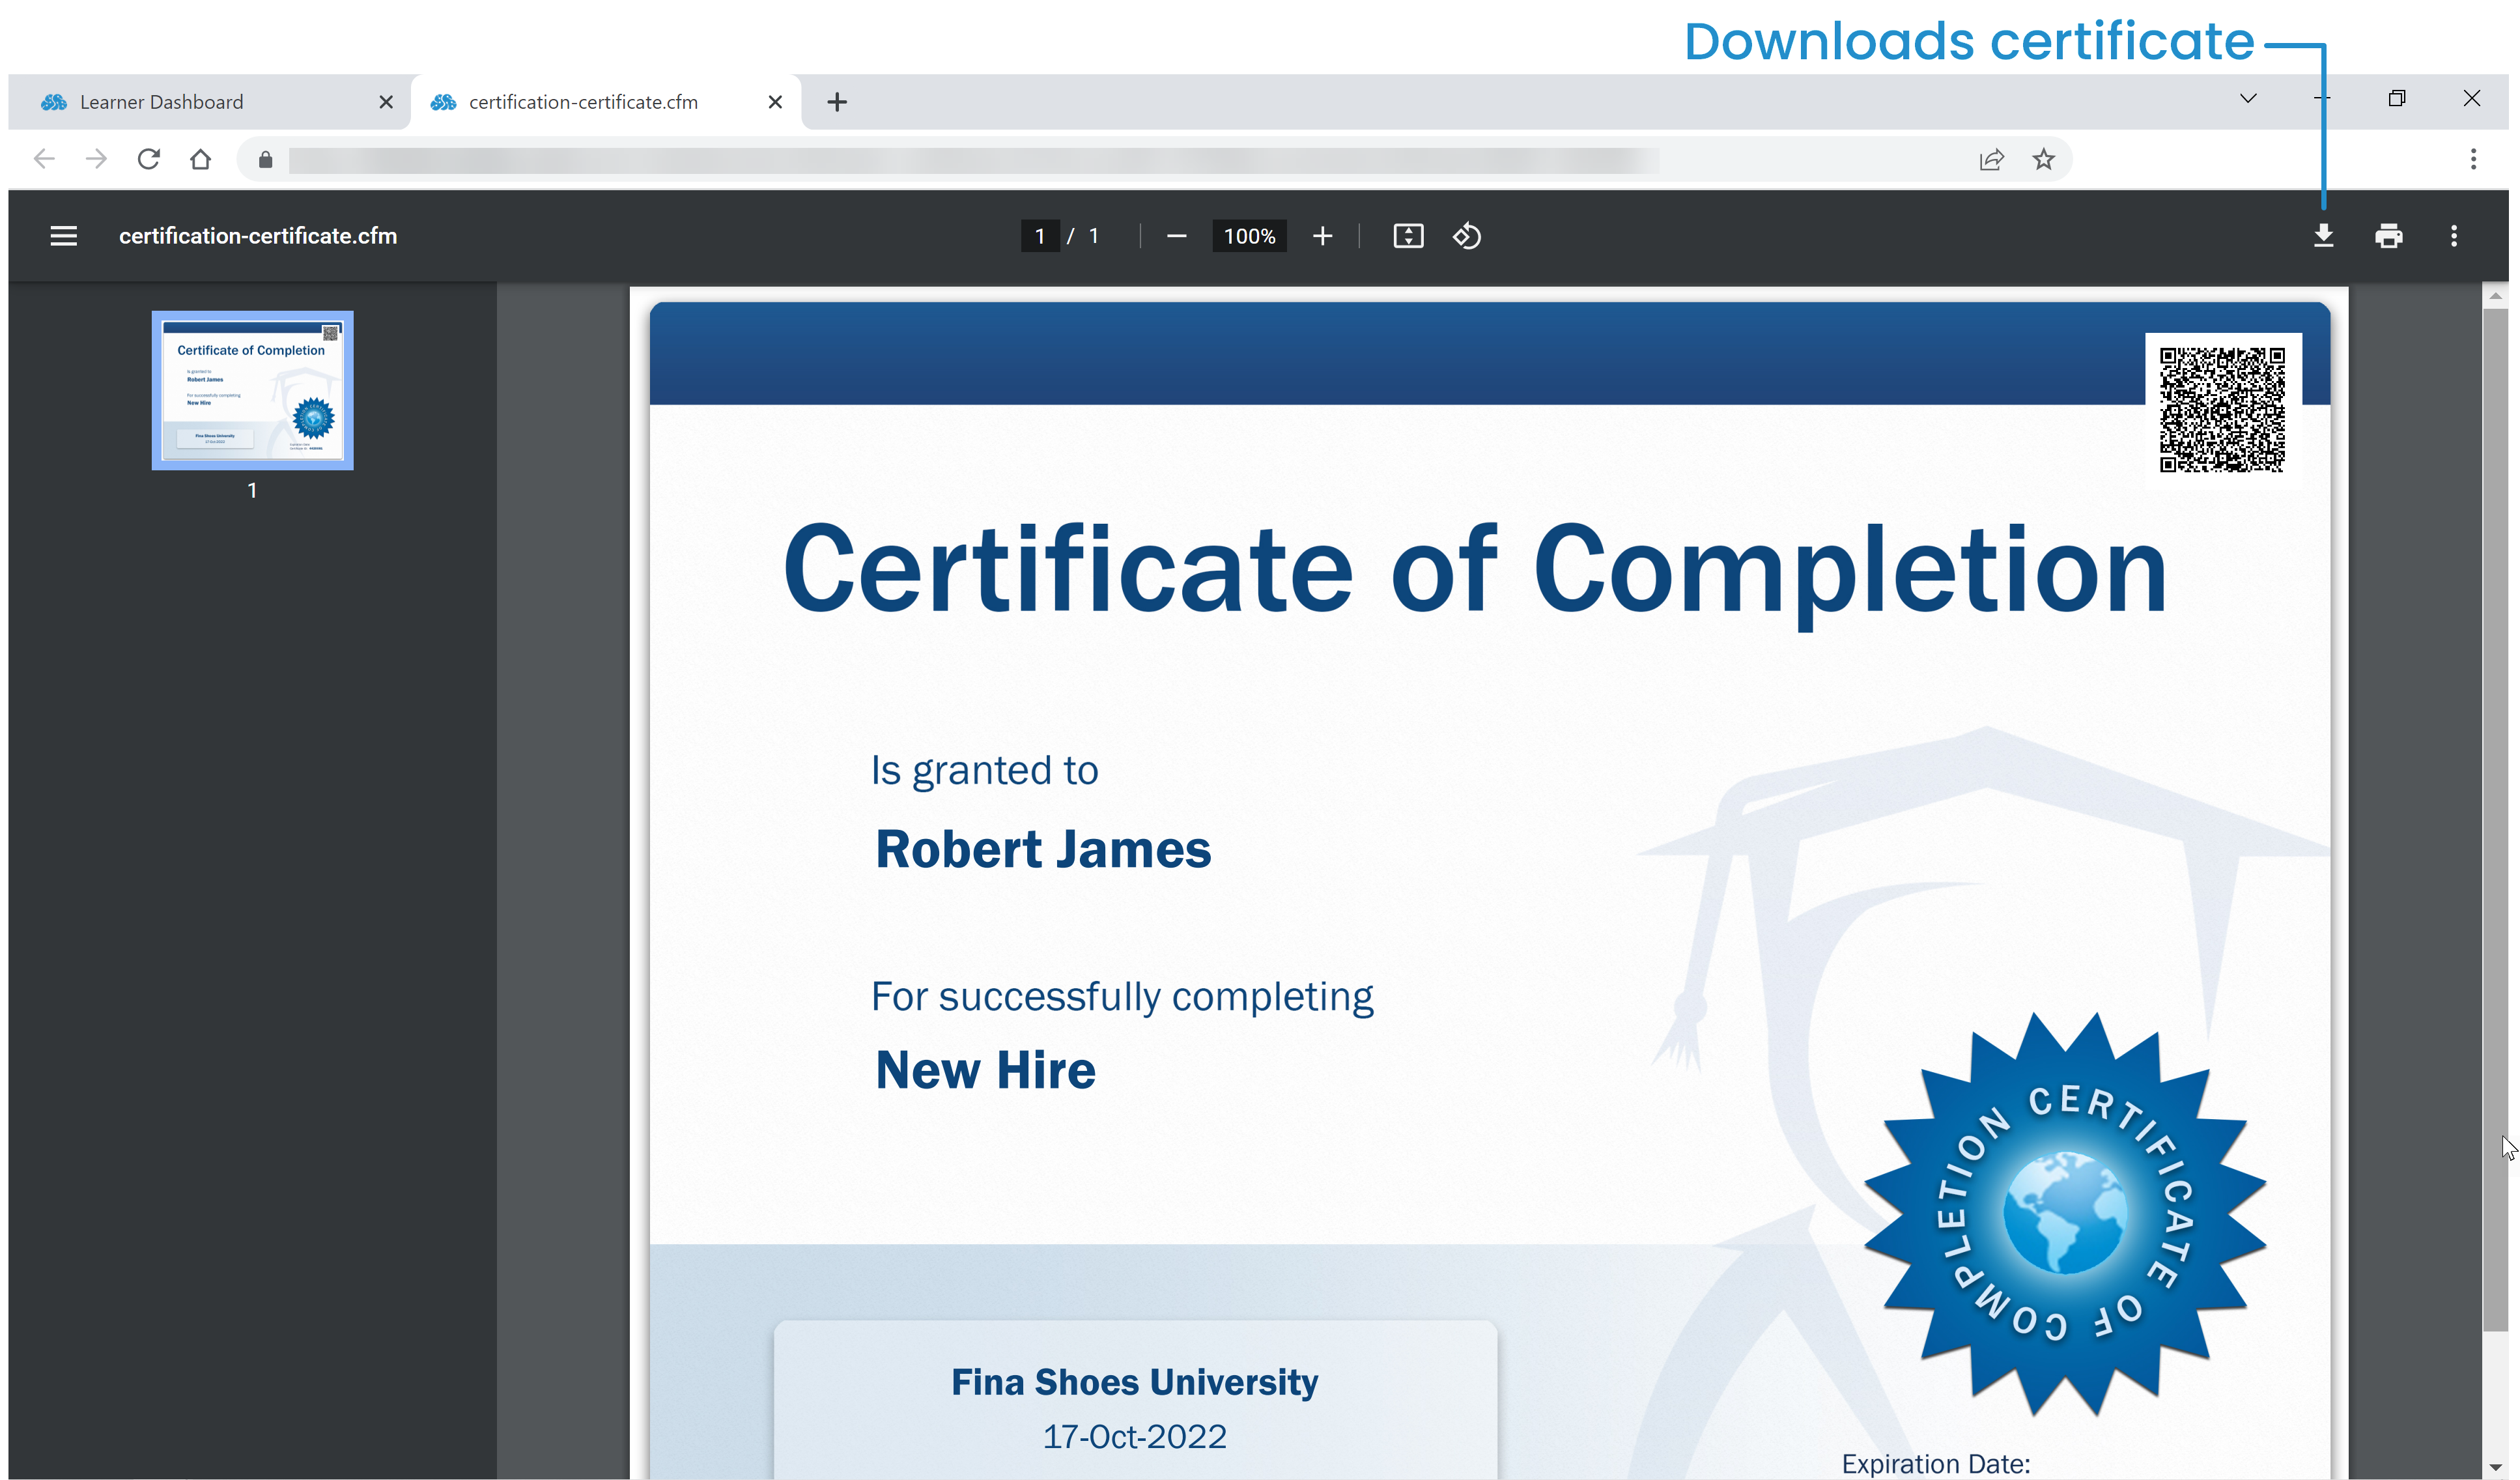 Downloading Certification Certificate 20221221